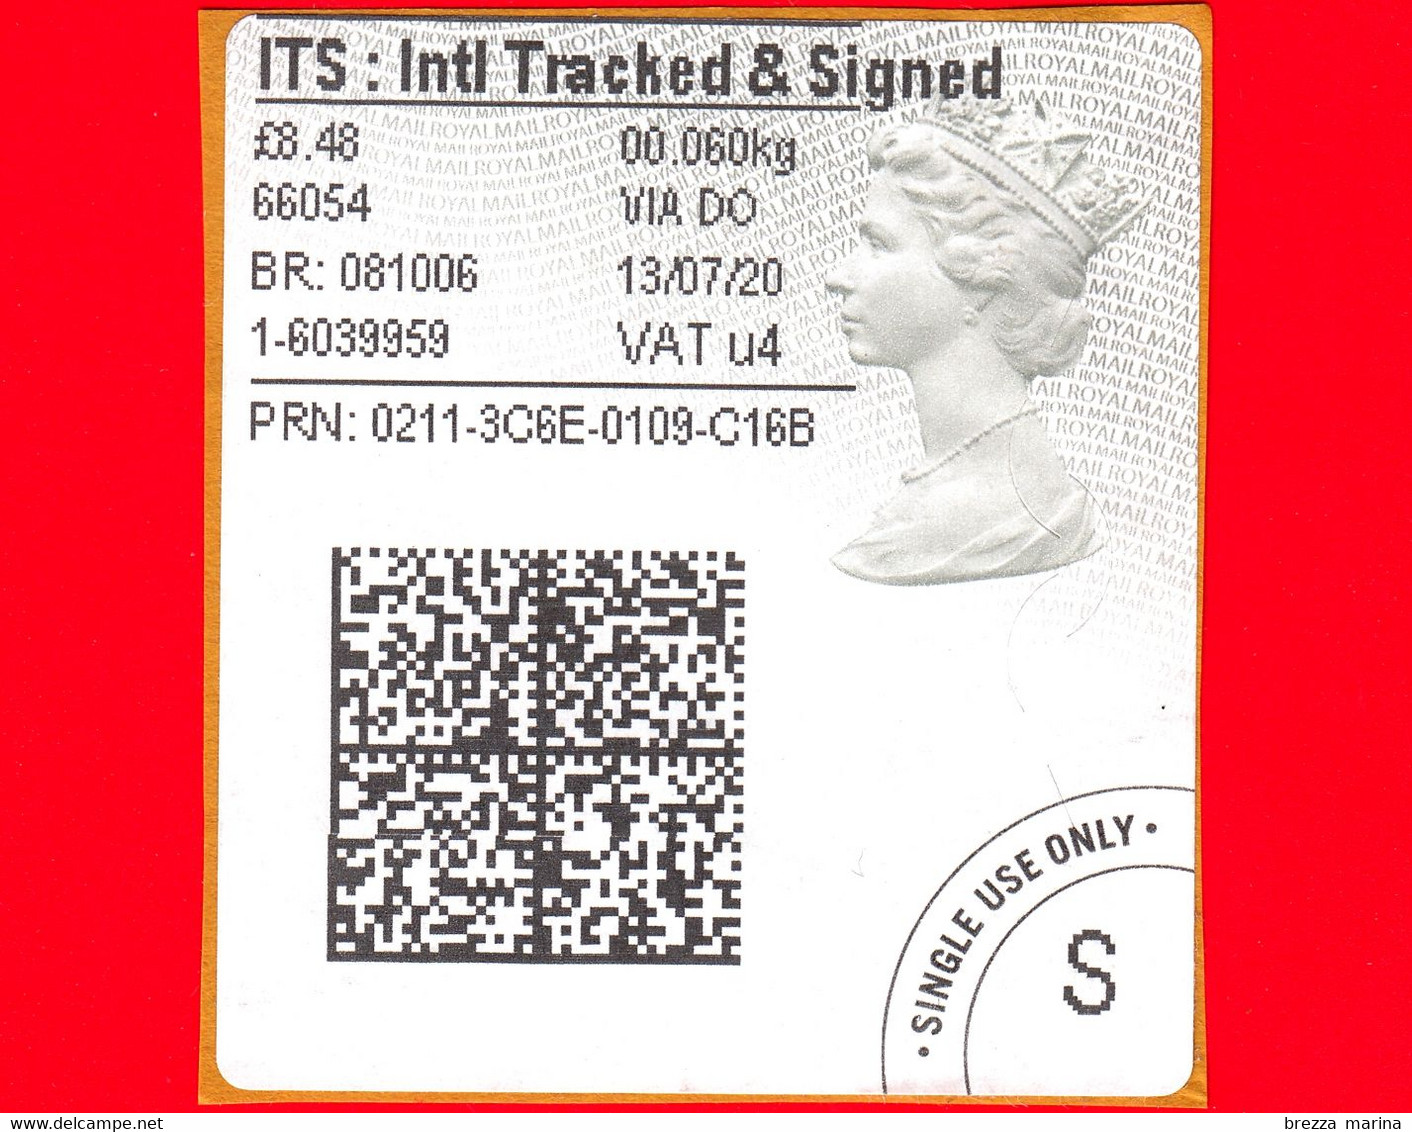 GB UK GRAN BRETAGNA - Usato -  2020 - ITS International Tracked & Signed - 8.48 - Universal Mail Stamps